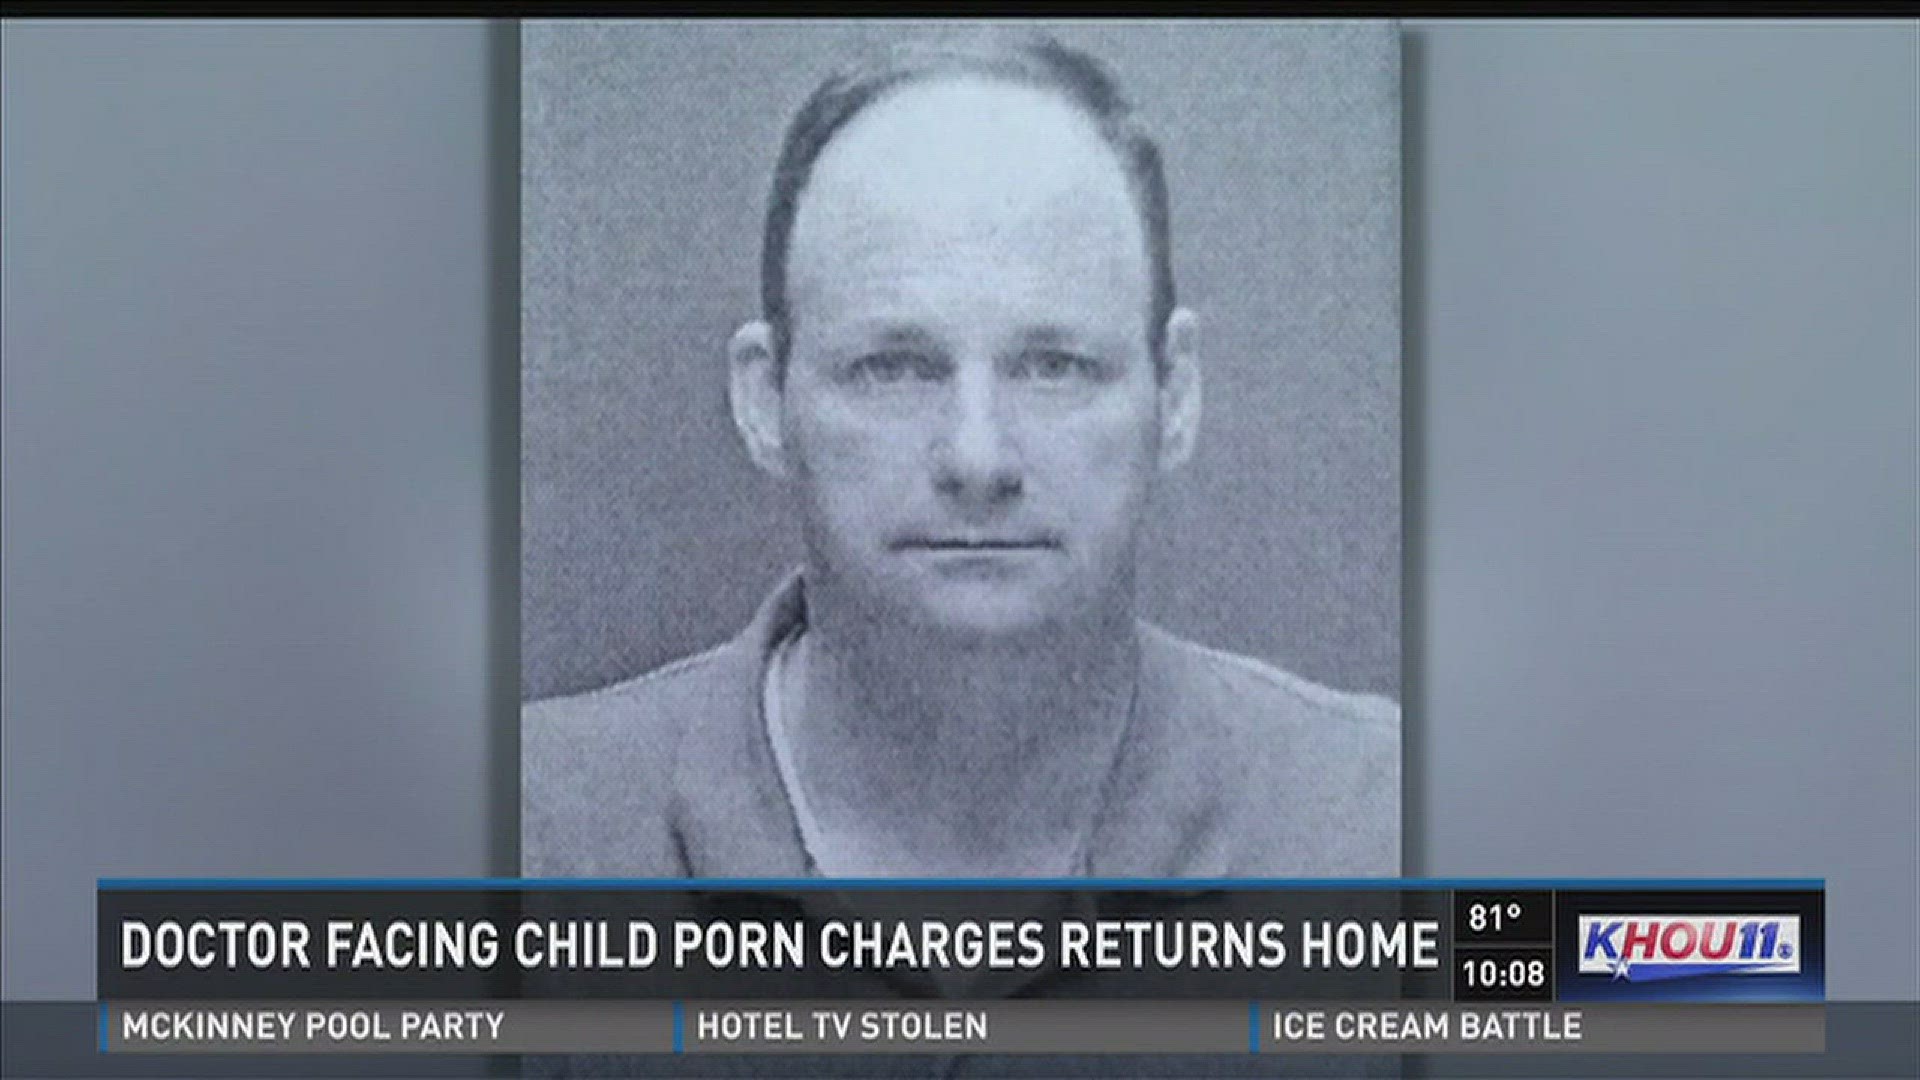 Doctor facing child porn charges returns home | khou.com